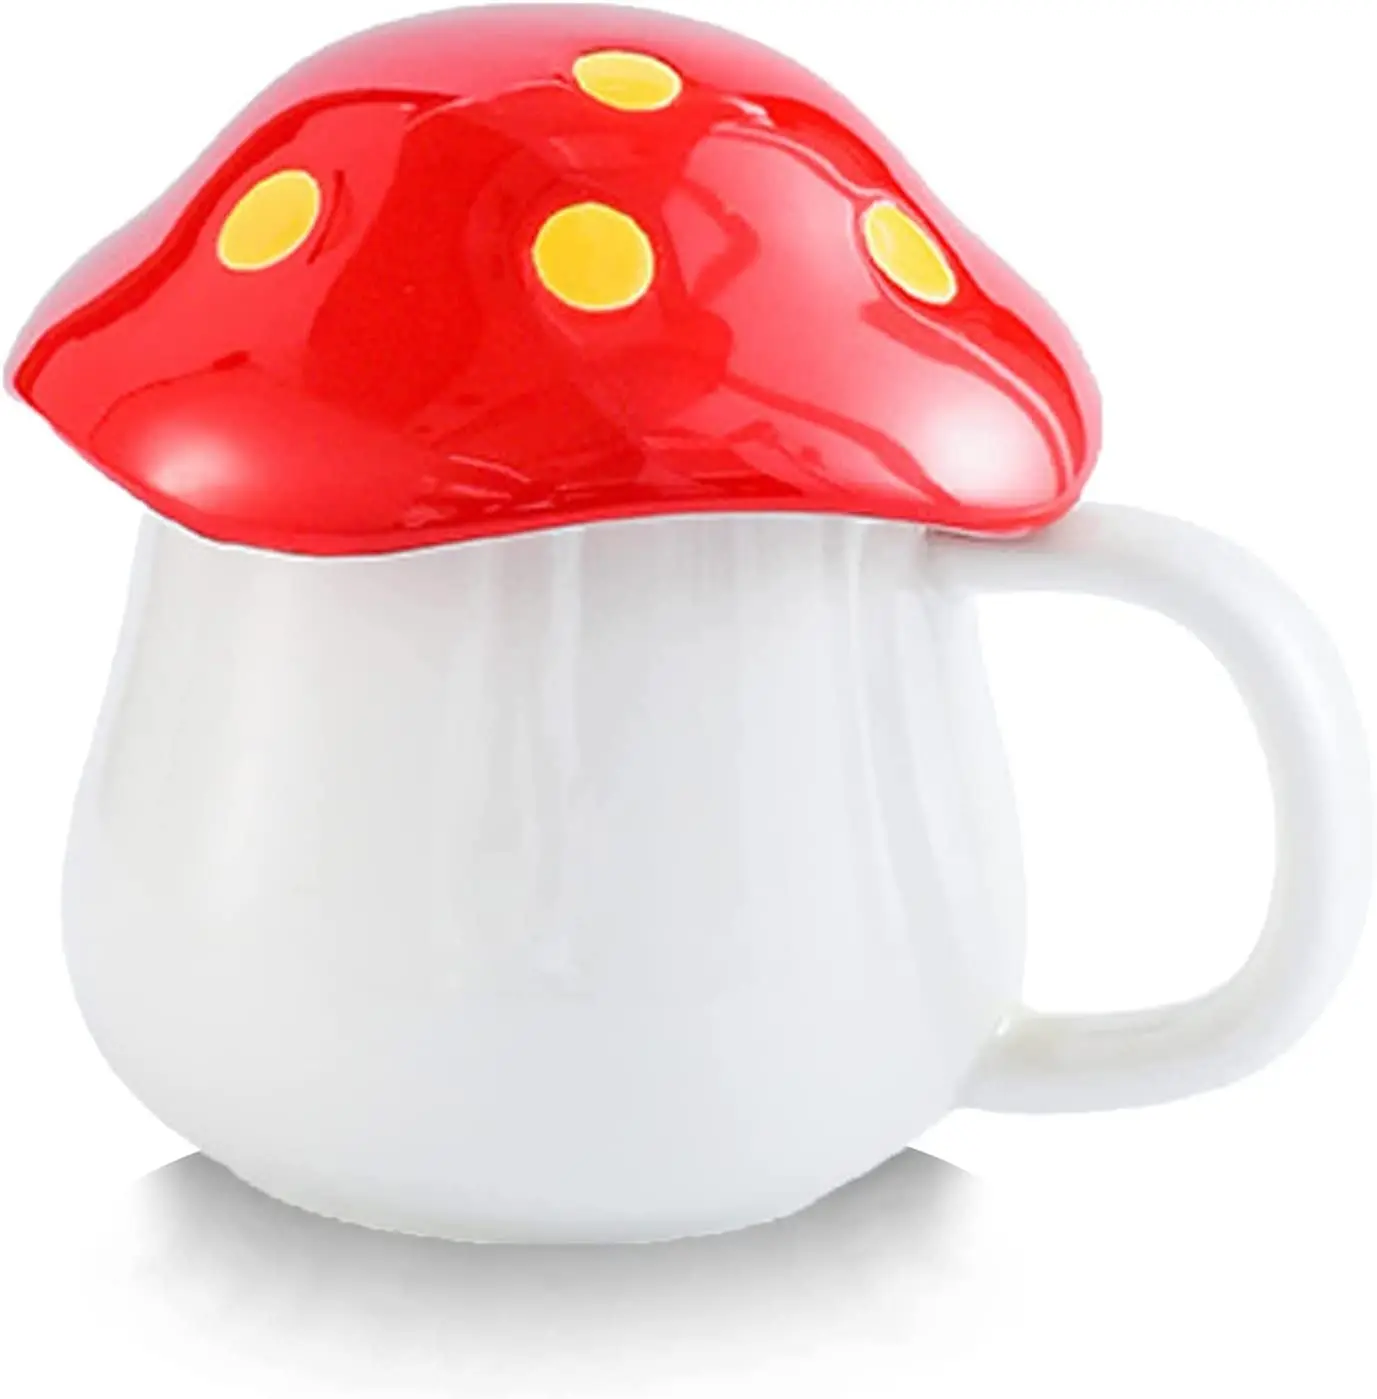 Funny Ceramic Mushroom Coffee Mugs Kawaii Porcelain Tea Cups With Lid  Novelty Mushroom Cups - Buy Ceramic Coffee Mugs,Ceramic Mushroom  Cups,Porcelain Tea Cups With Lid Product on 